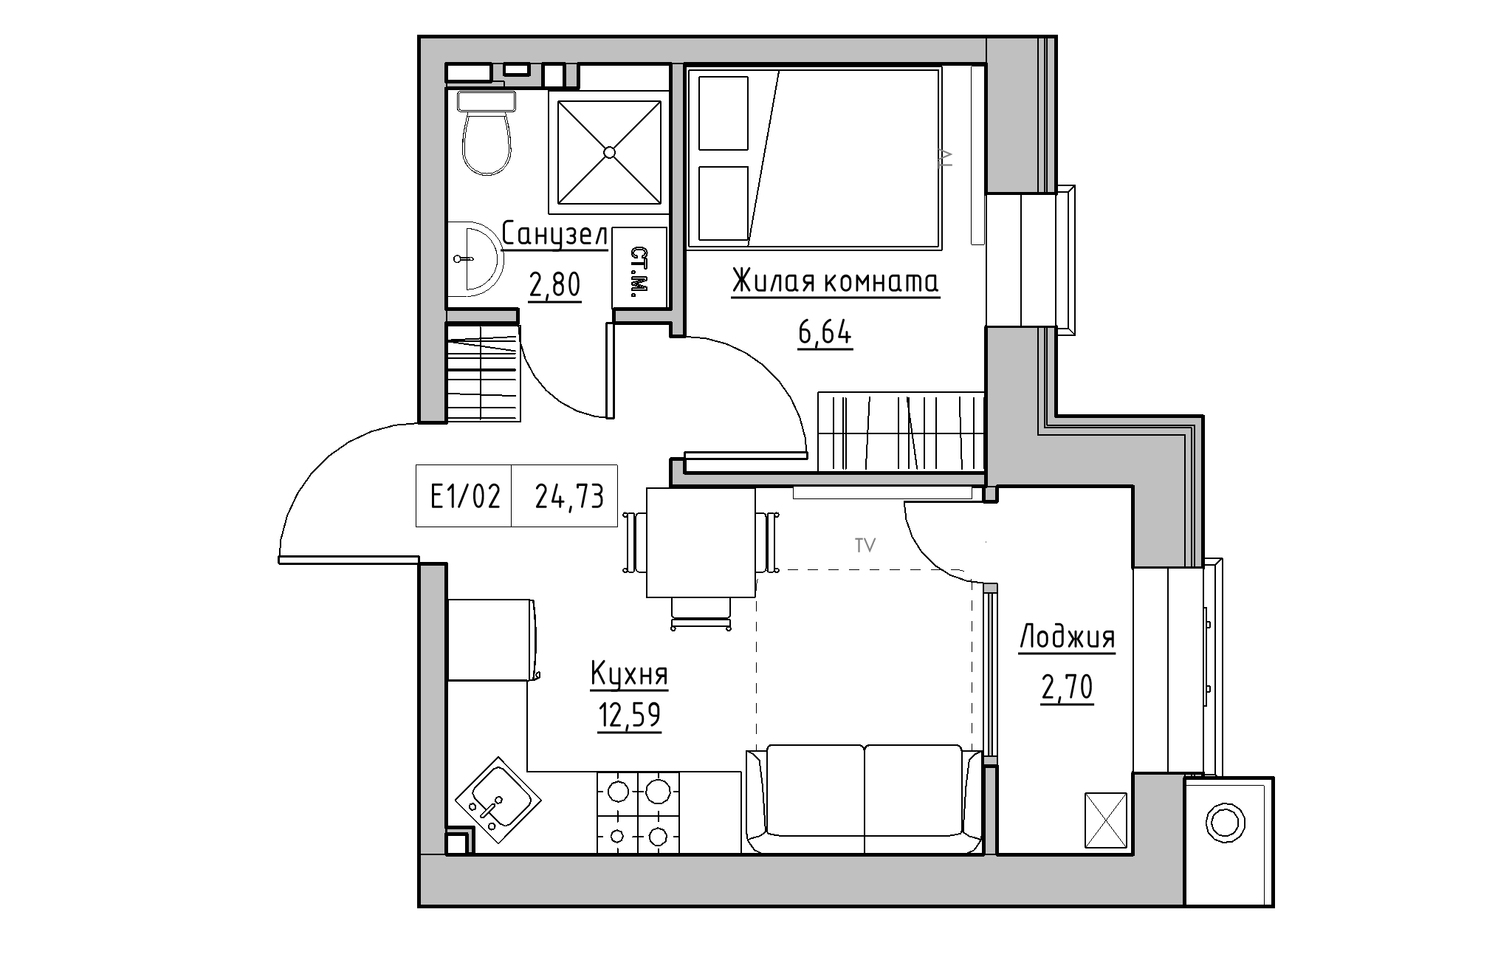 Planning 1-rm flats area 24.73m2, KS-013-04/0001.